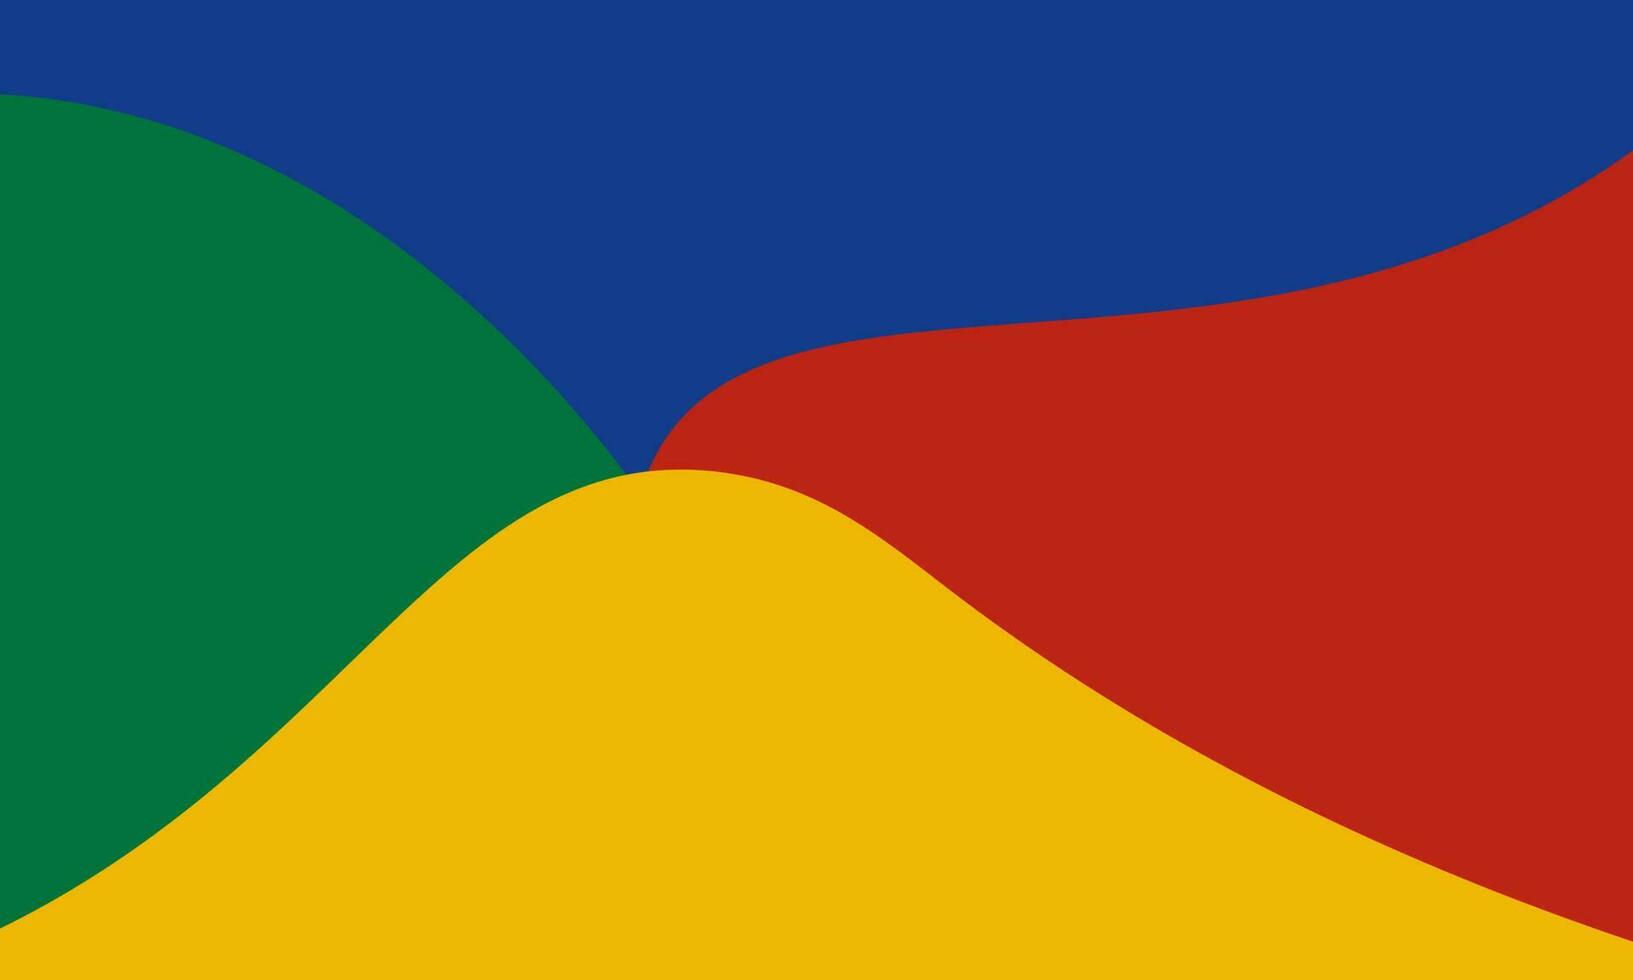 vektor abstrakt bakgrund röd, grön, blå, gul. mall design horisontell baner